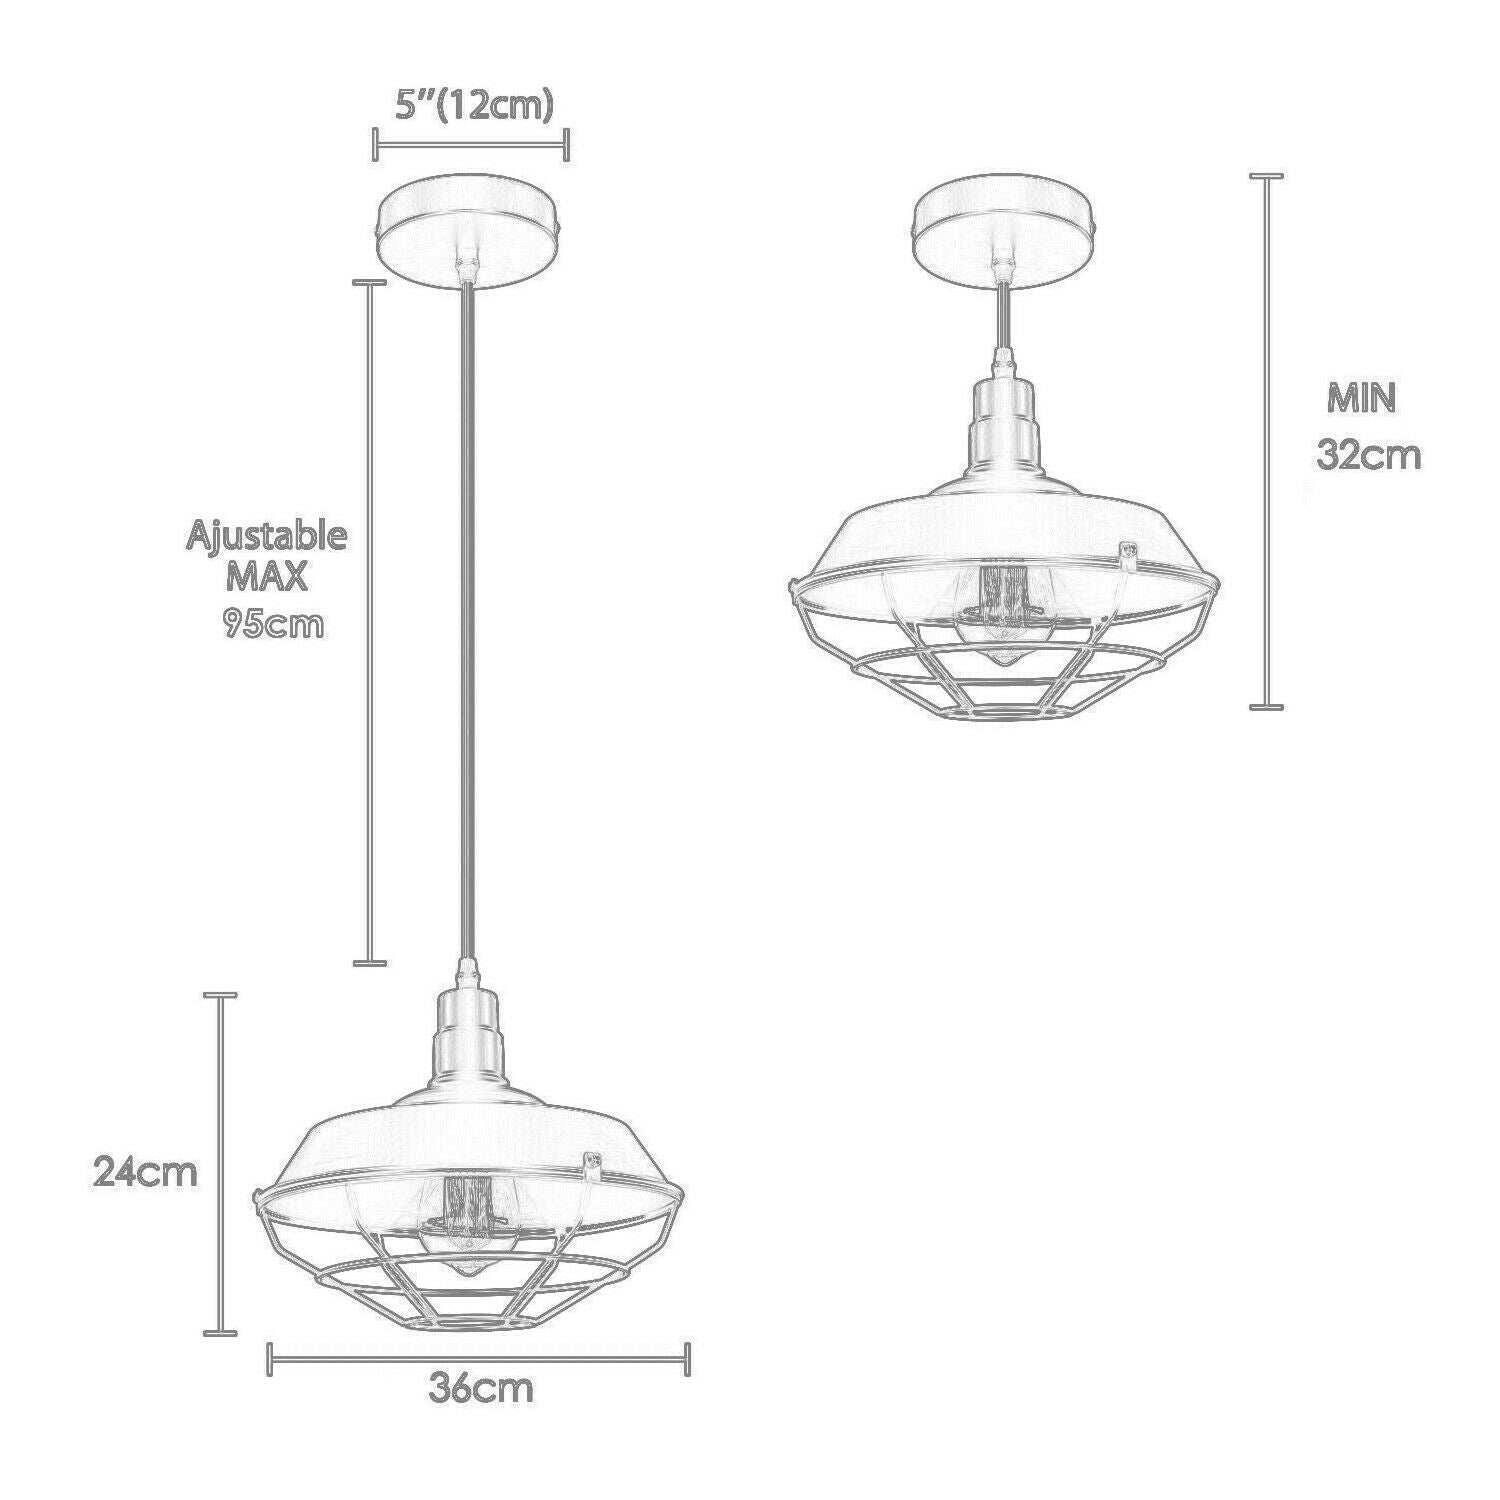 Grey Pendant Light Industrial Single Ceiling Hanging Lighting Fixture~1546 - LEDSone UK Ltd